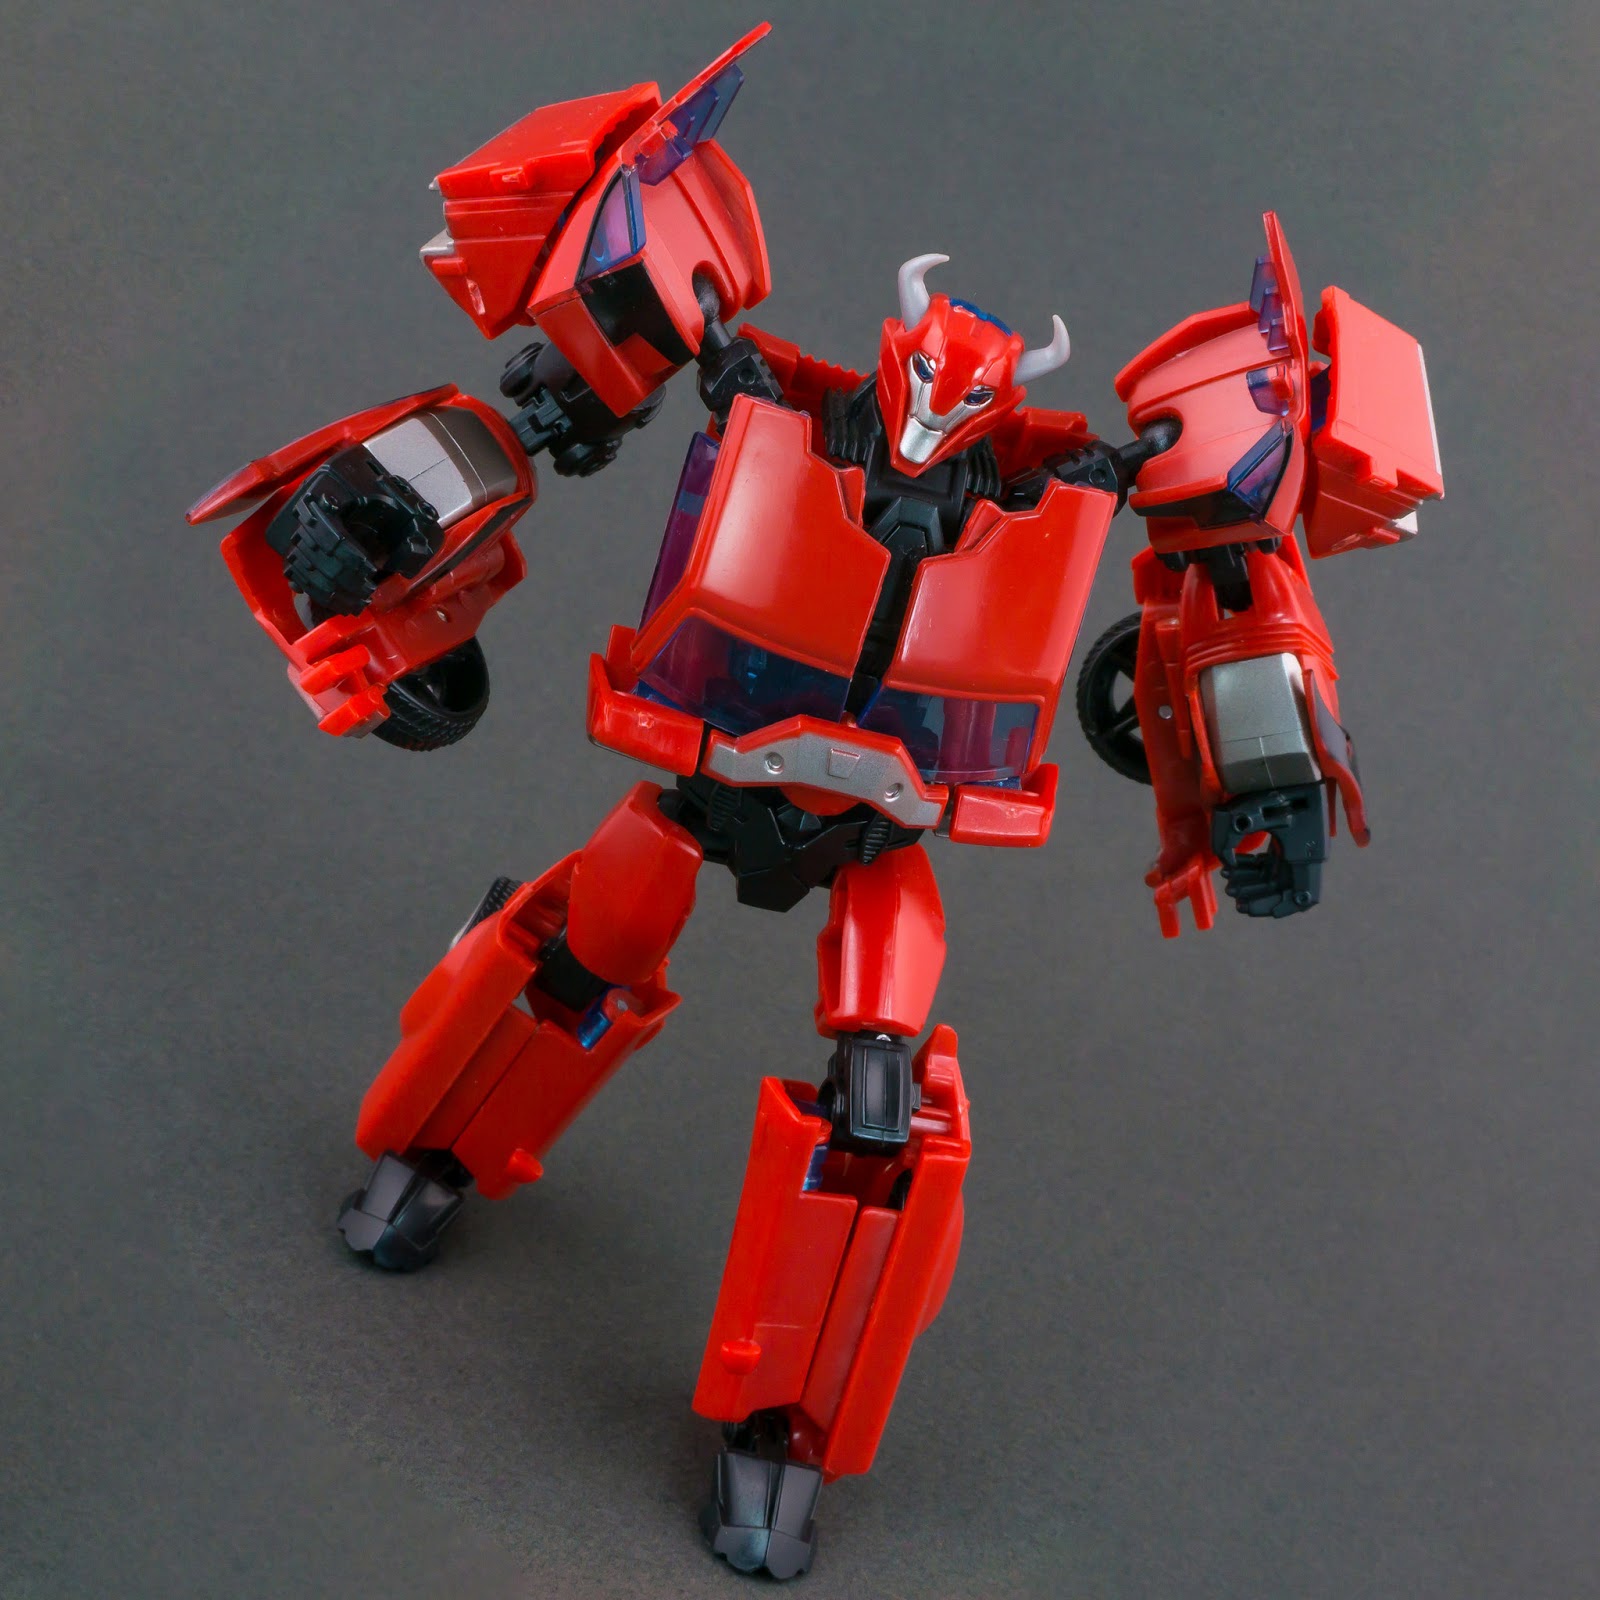 Transformers Prime Cliffjumper running pose